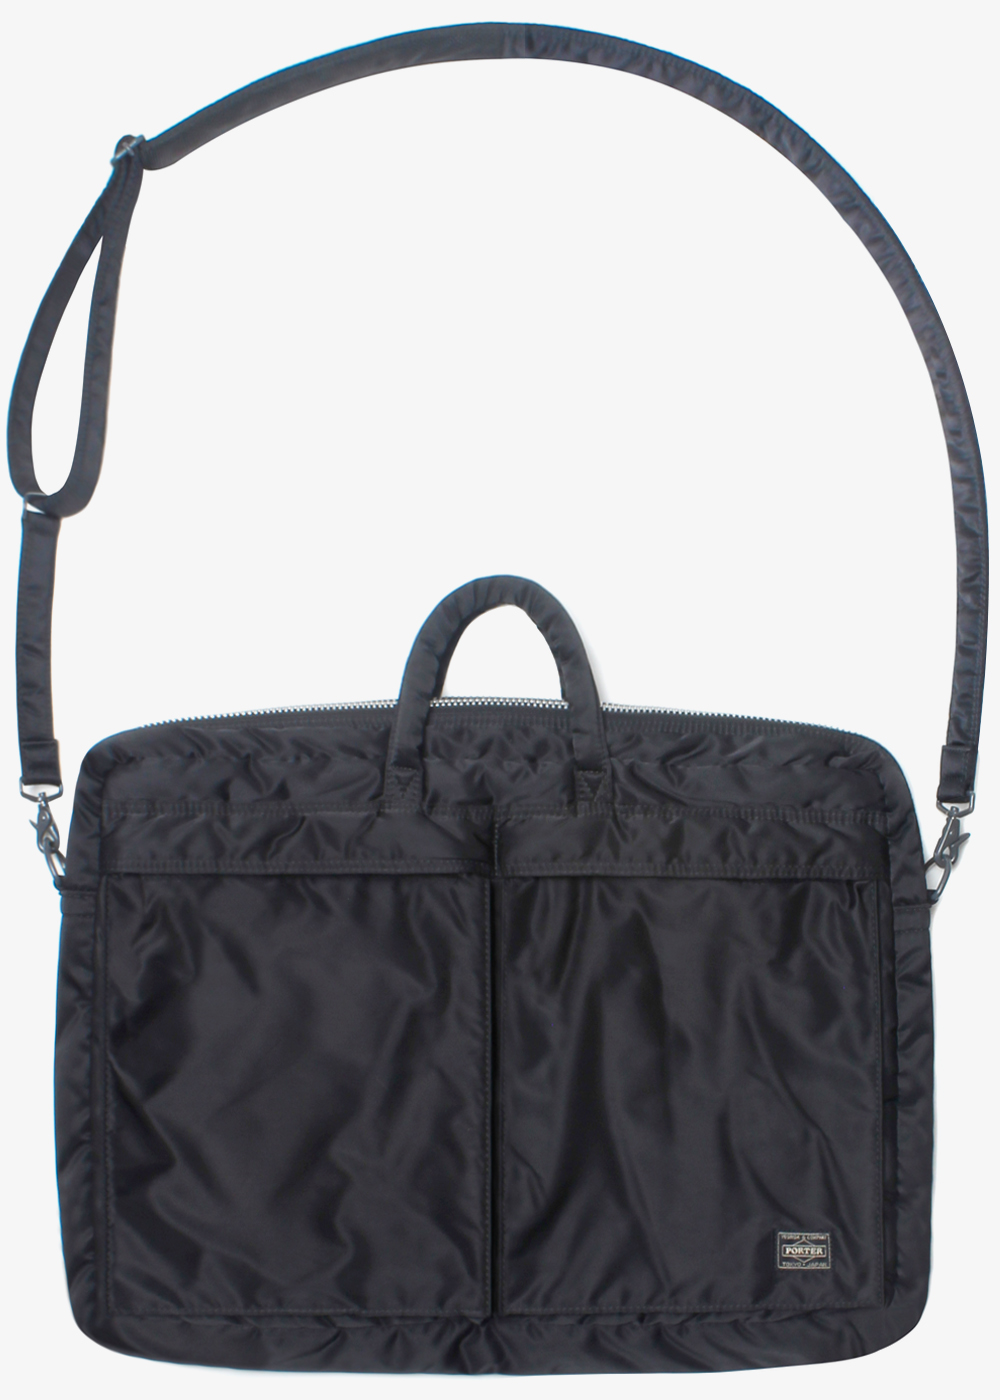 PORTERnylon tanker briefcase bag